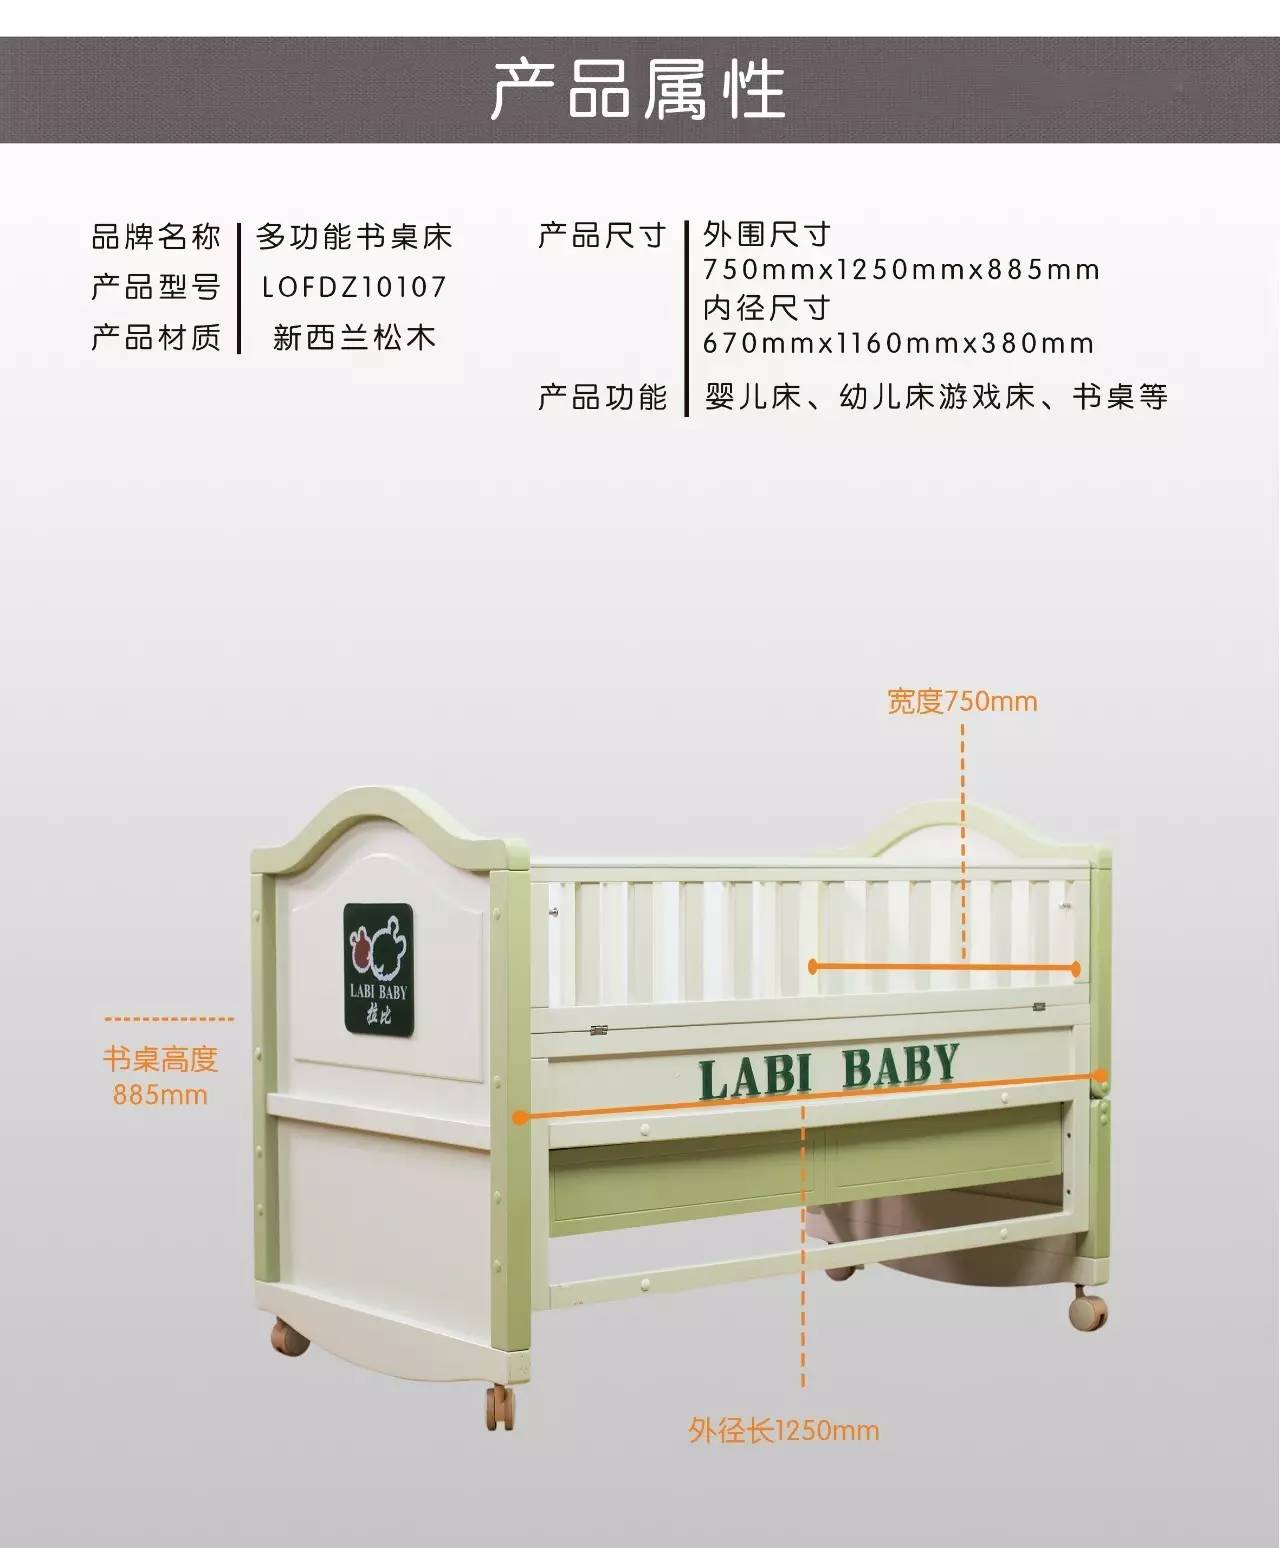 3f拉比多功能童床五种模式多功能不闲置只为陪伴baby成长每一天